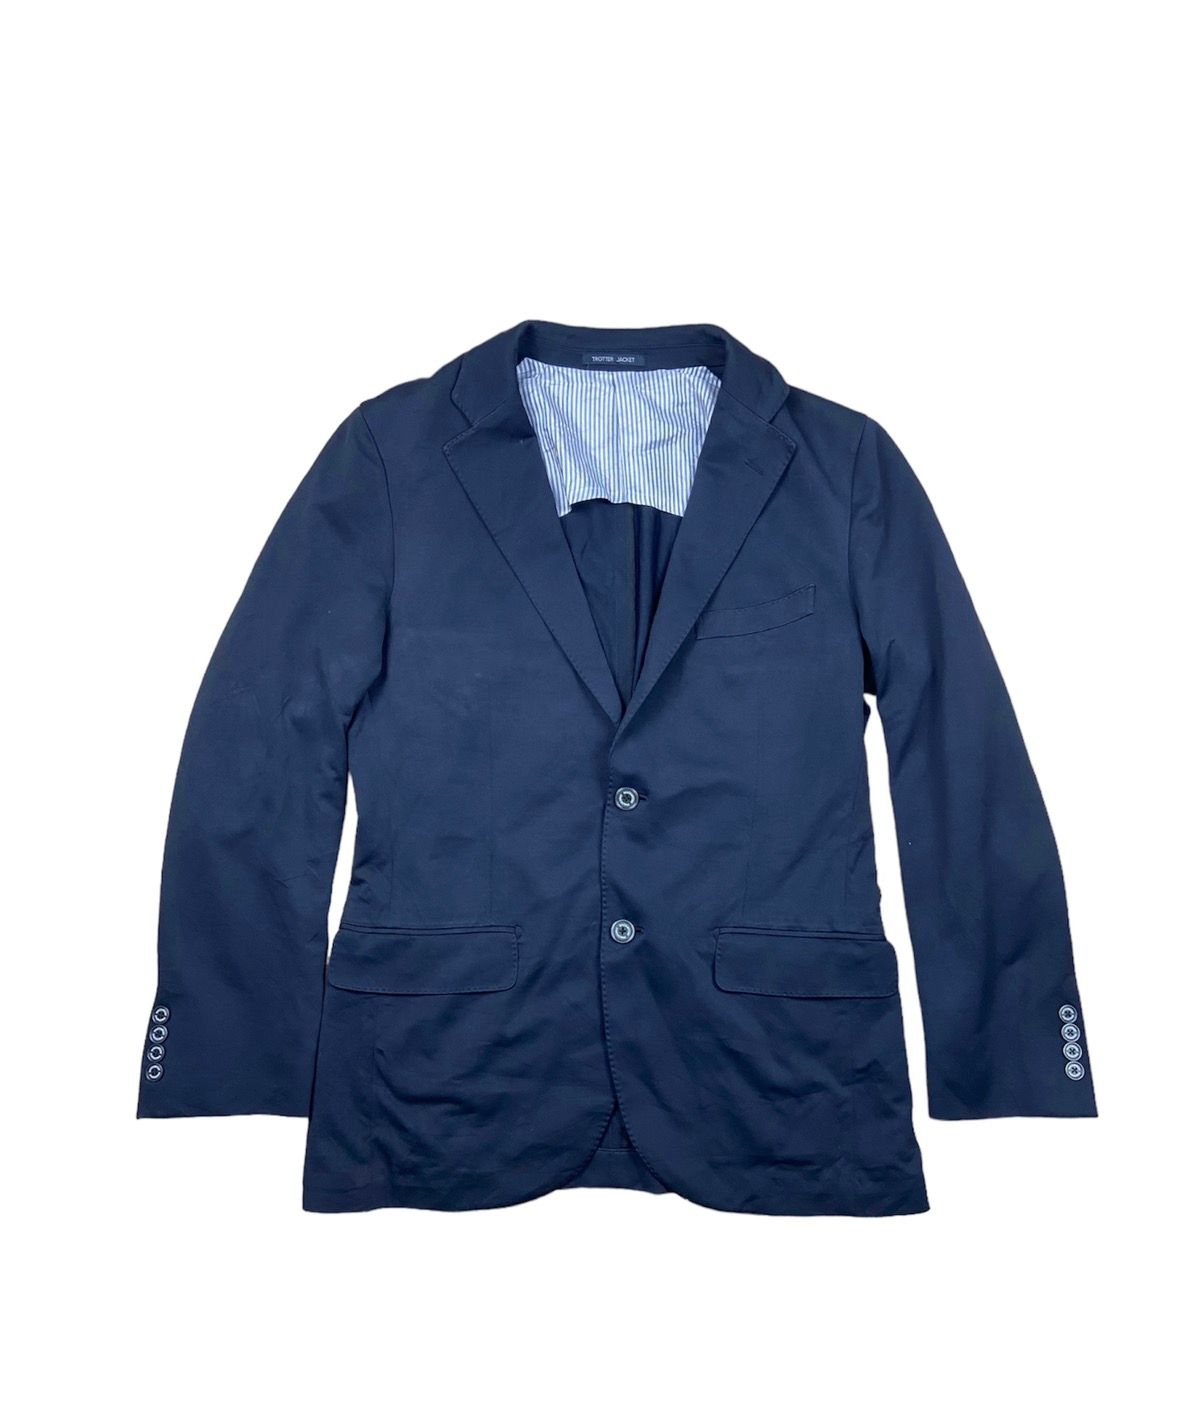 Mackintosh Vintage Mackintosh Philosophy Trotter Jacket Size 40R - 1 Preview